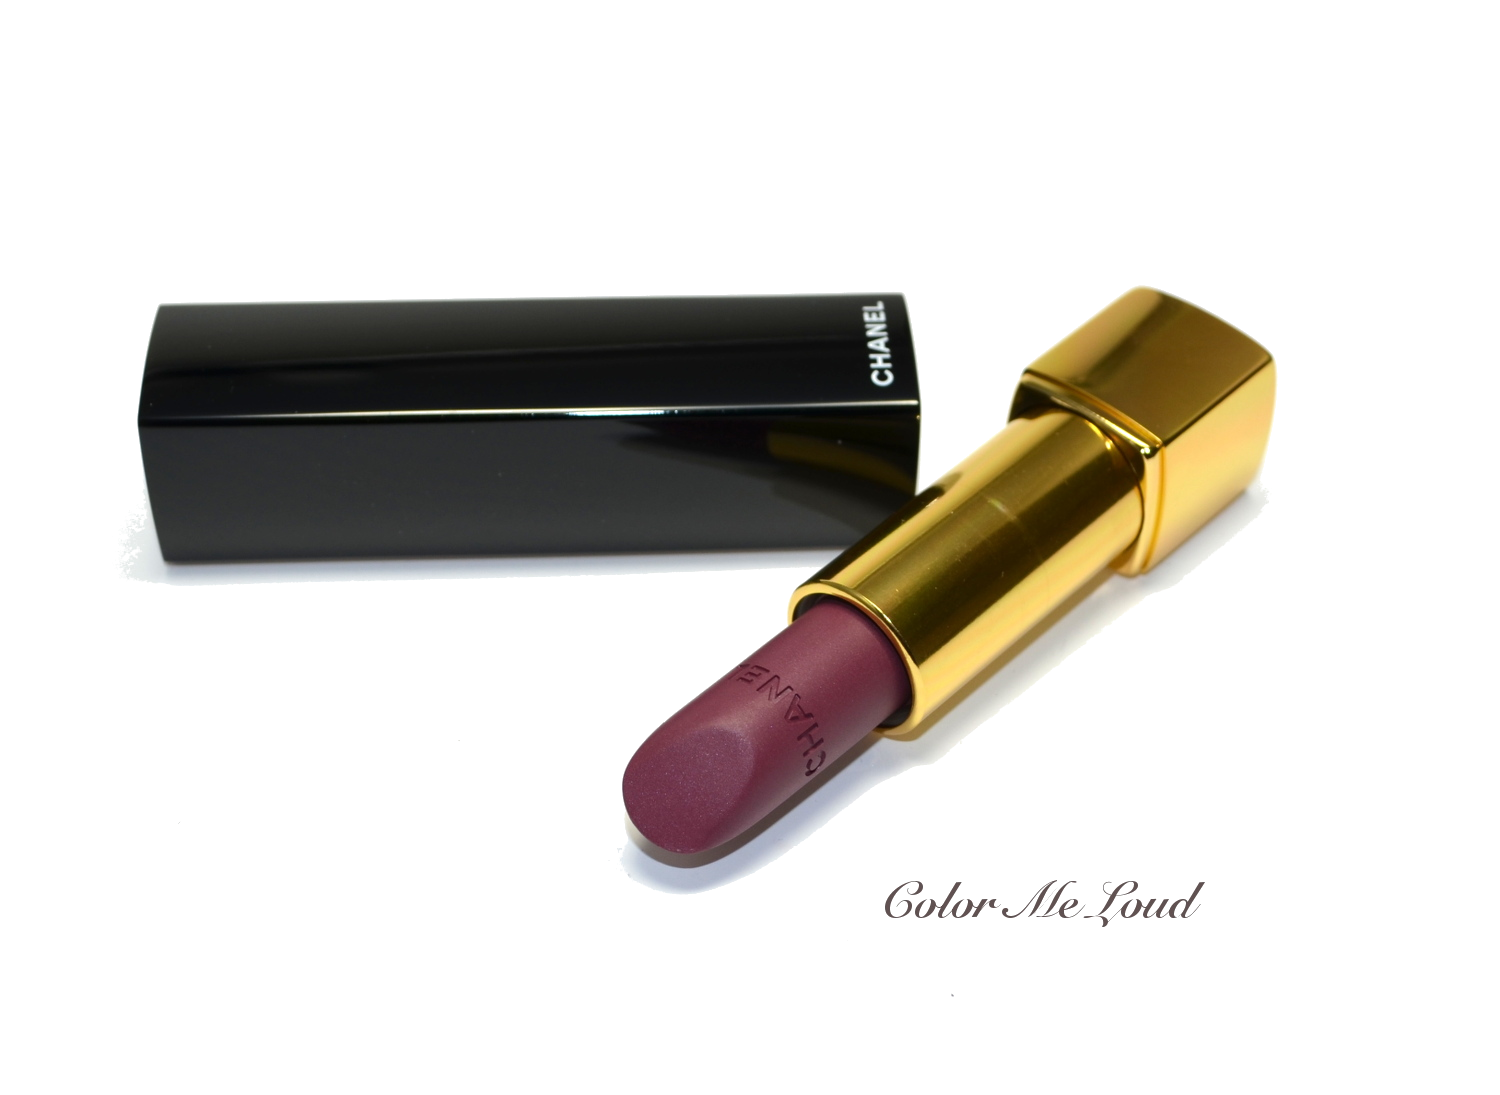 Chanel Rouge Allure Gloss Picks  Sensuel, Affriolant, Sensible, Séduction  and Distinction - The Beauty Look Book